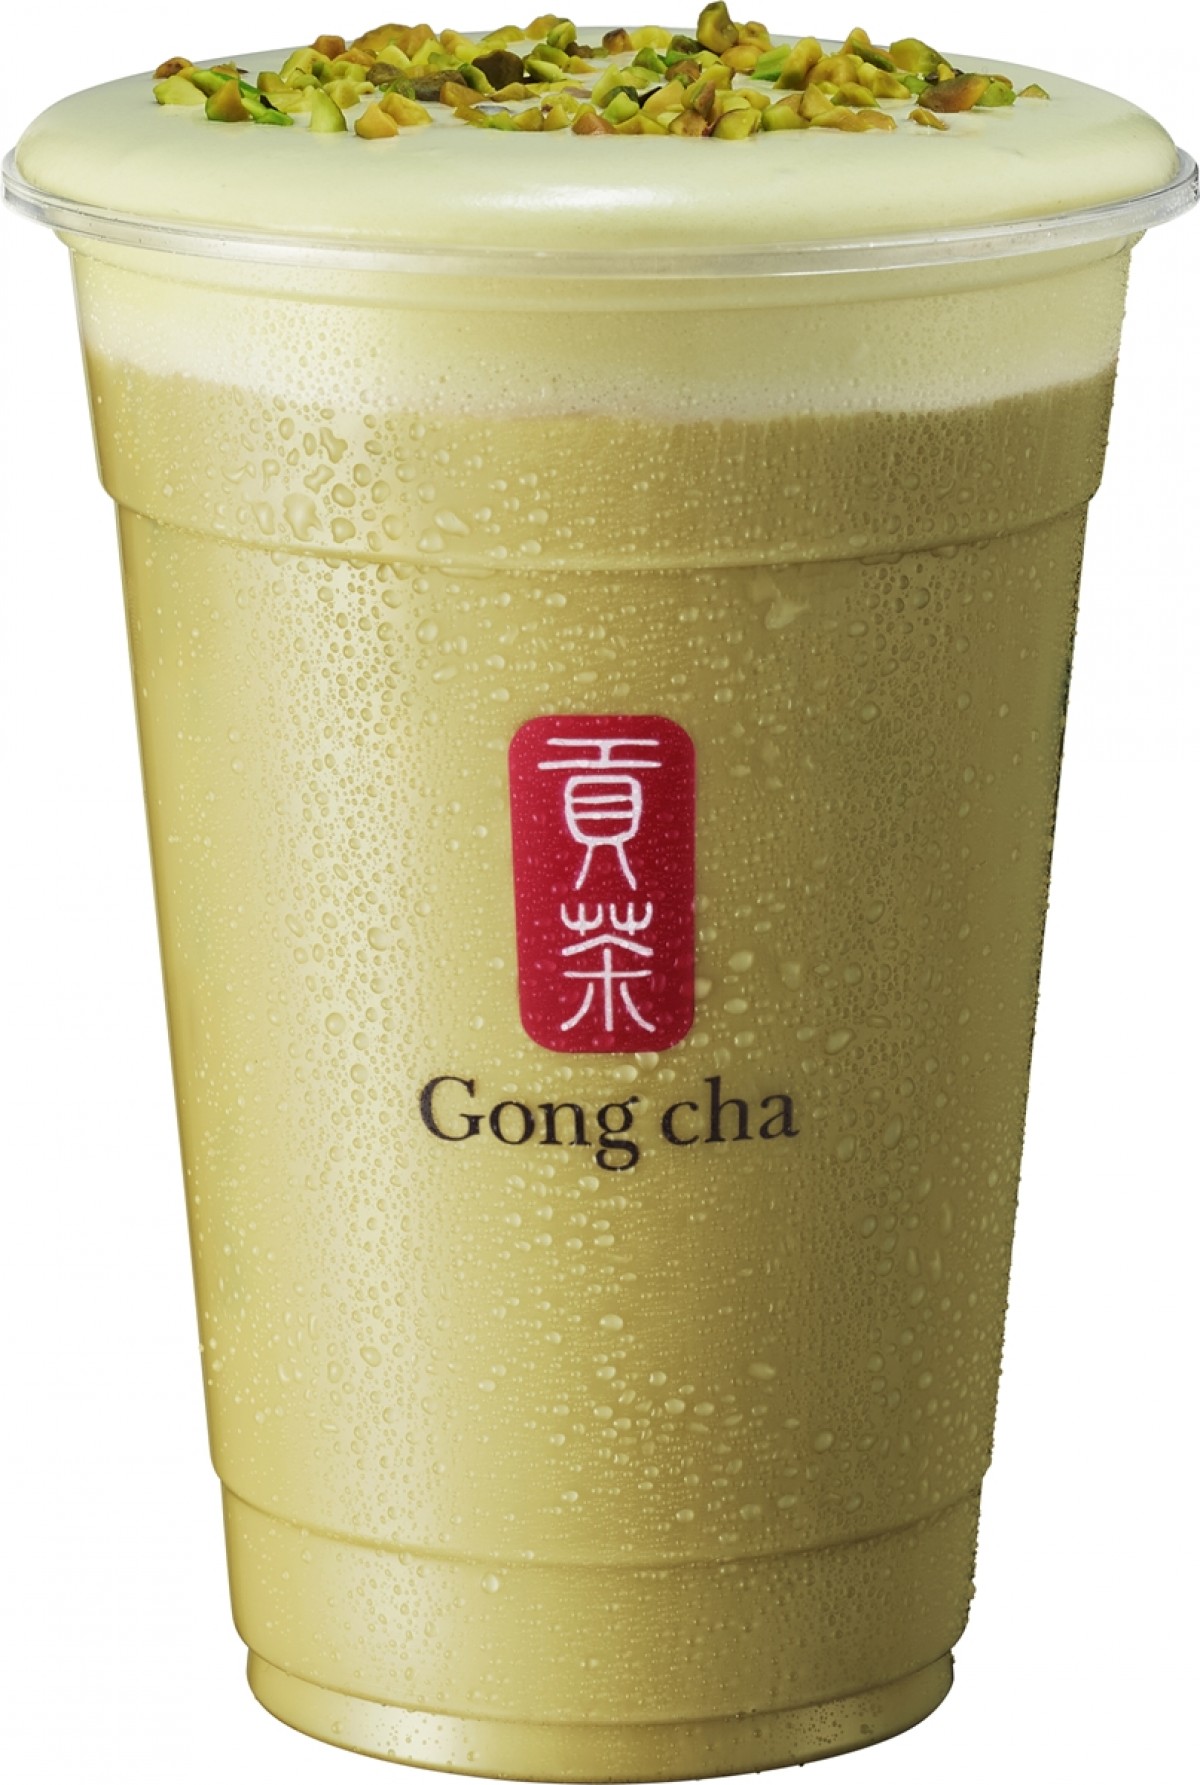 Gong cha Tea Dessert “贅沢ピスタチオ”